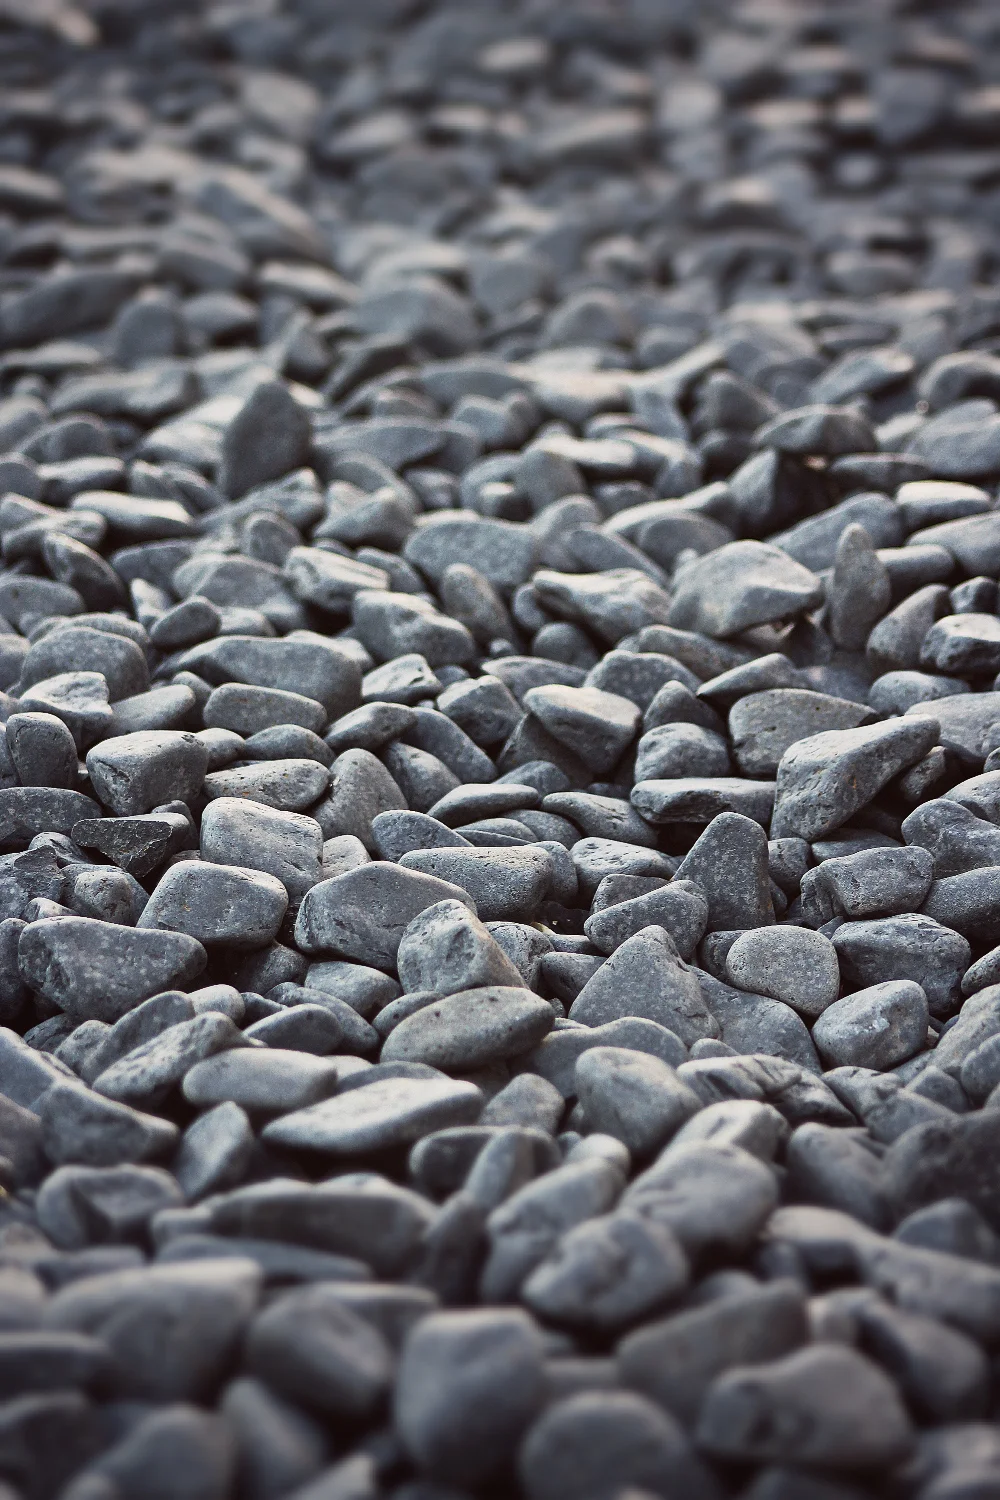 #nature #stones #peebles #blackstones